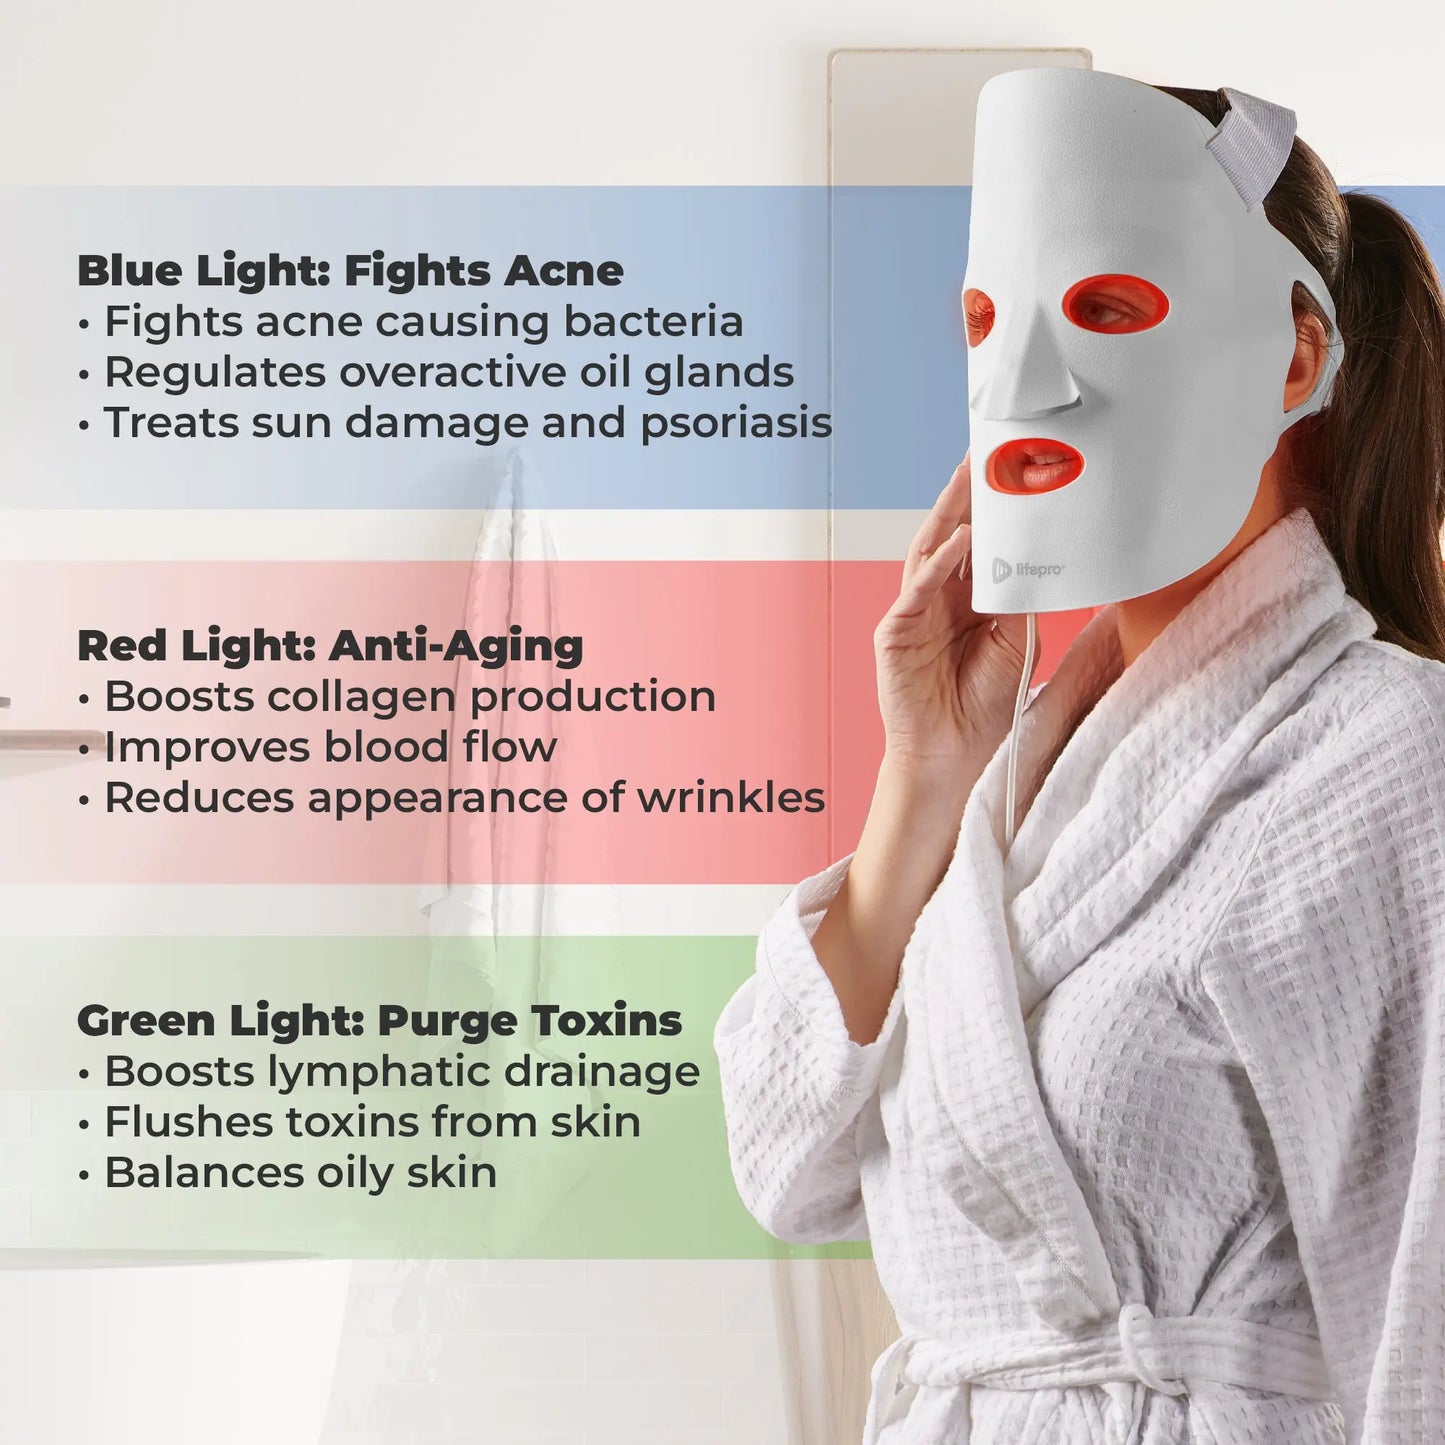 RevitaGlow Light Therapy Mask 